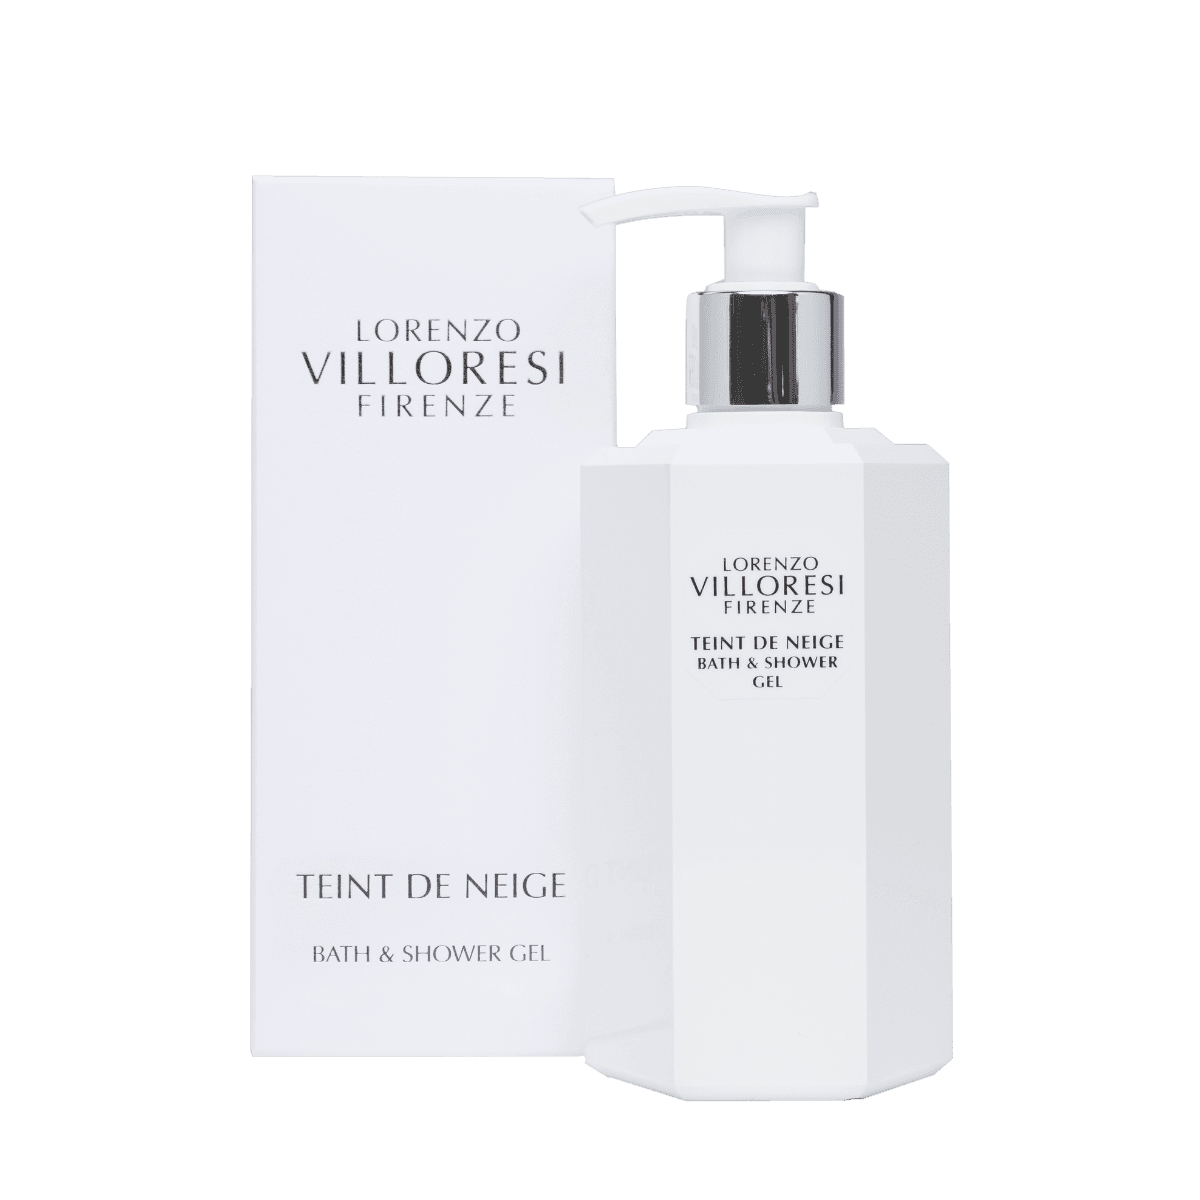 Lorenzo Villoresi - Teint de Neige Bath & shower gel